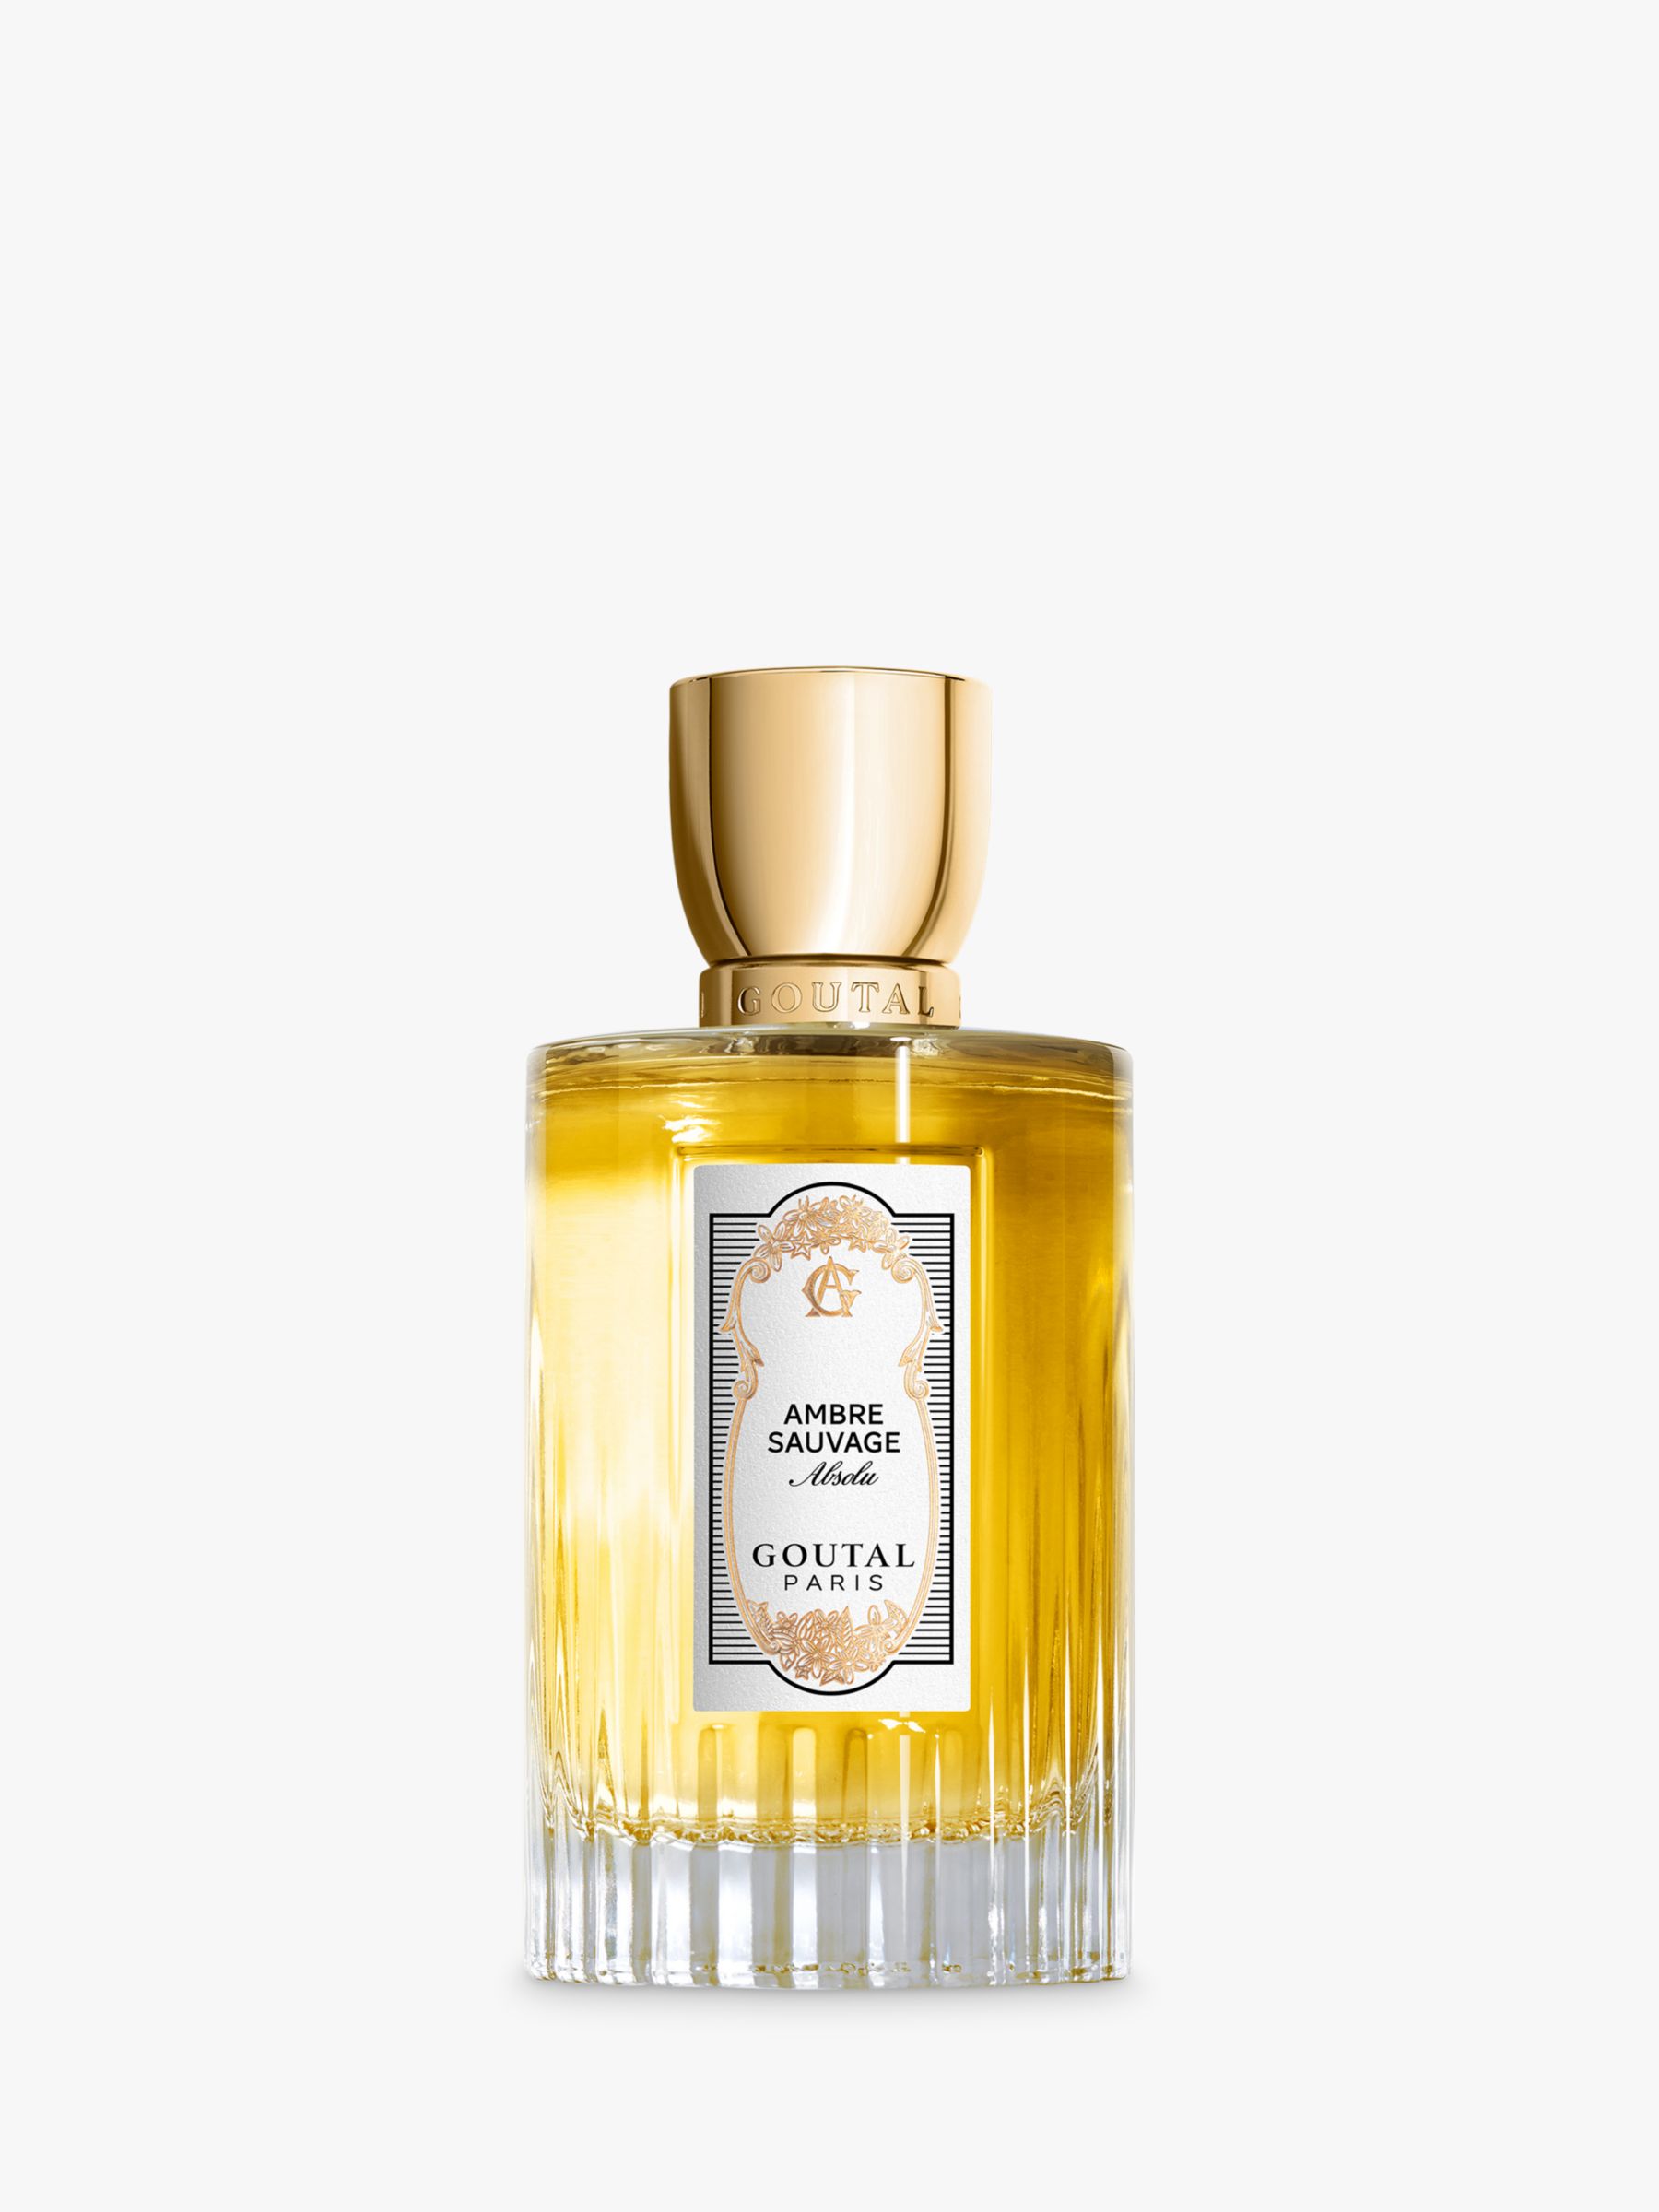  Coco Mademoiselle Eau De Parfum Perfume Sample Vial Travel 1.5  Ml/0.05 Oz by Paris Fragrance : Beauty & Personal Care